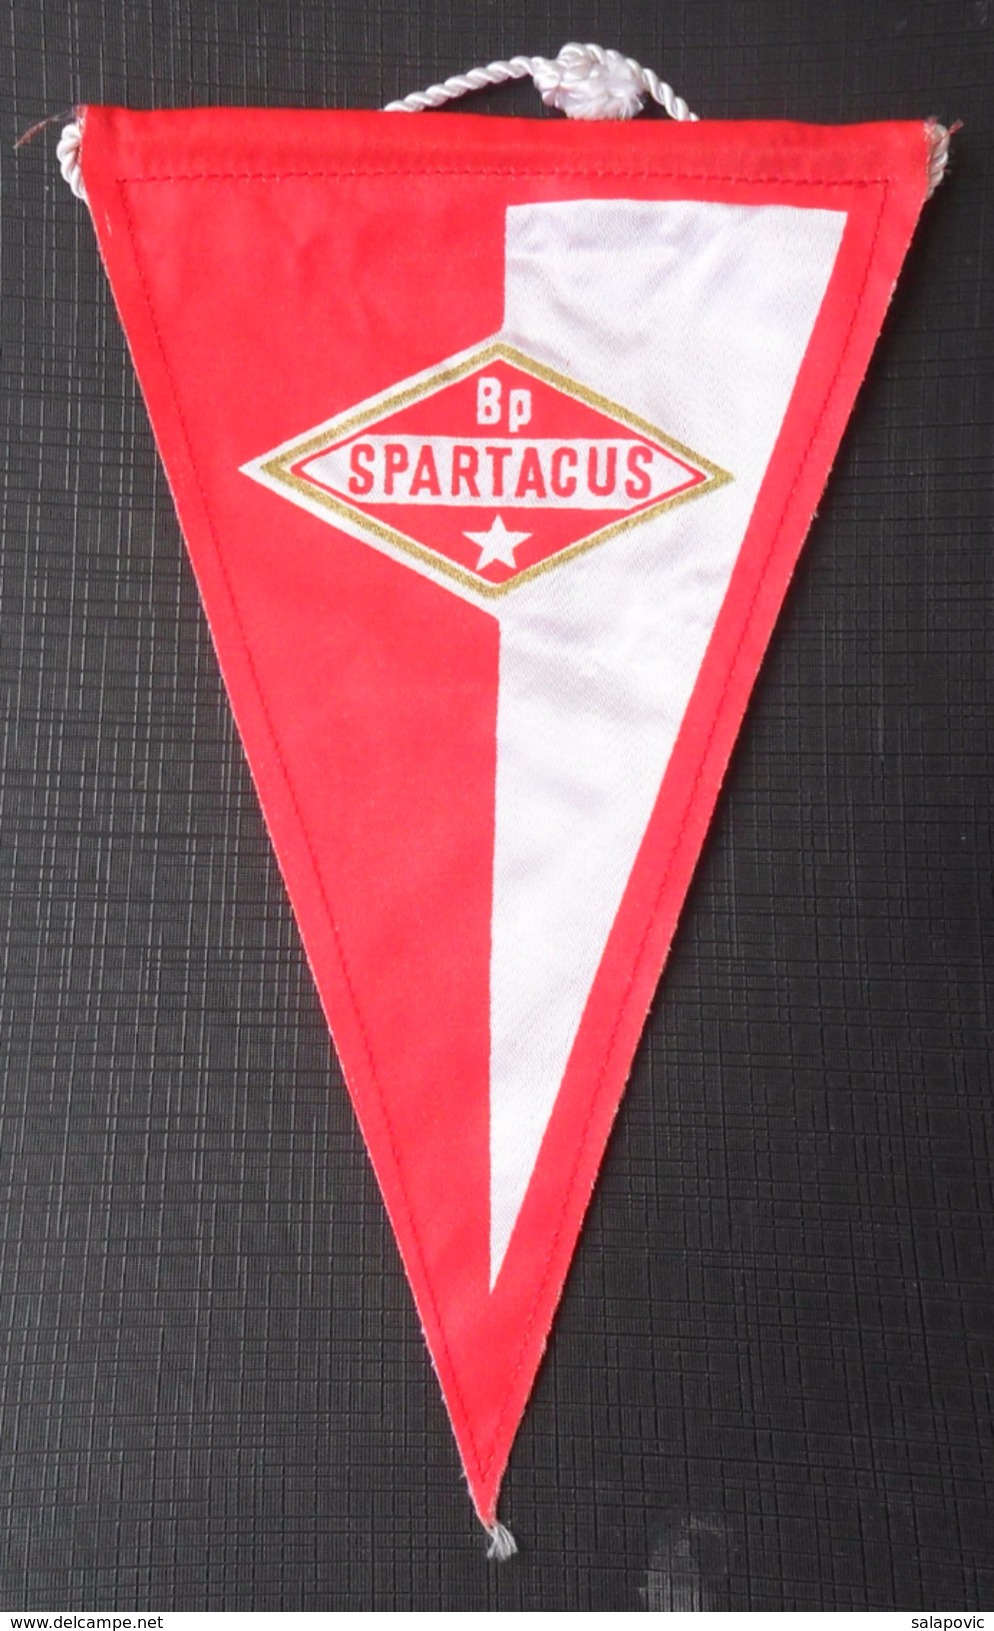 Budapesti Spartacus HUNGARY FOOTBALL CLUB, SOCCER / FUTBOL / CALCIO OLD PENNANT, SPORTS FLAG - Abbigliamento, Souvenirs & Varie